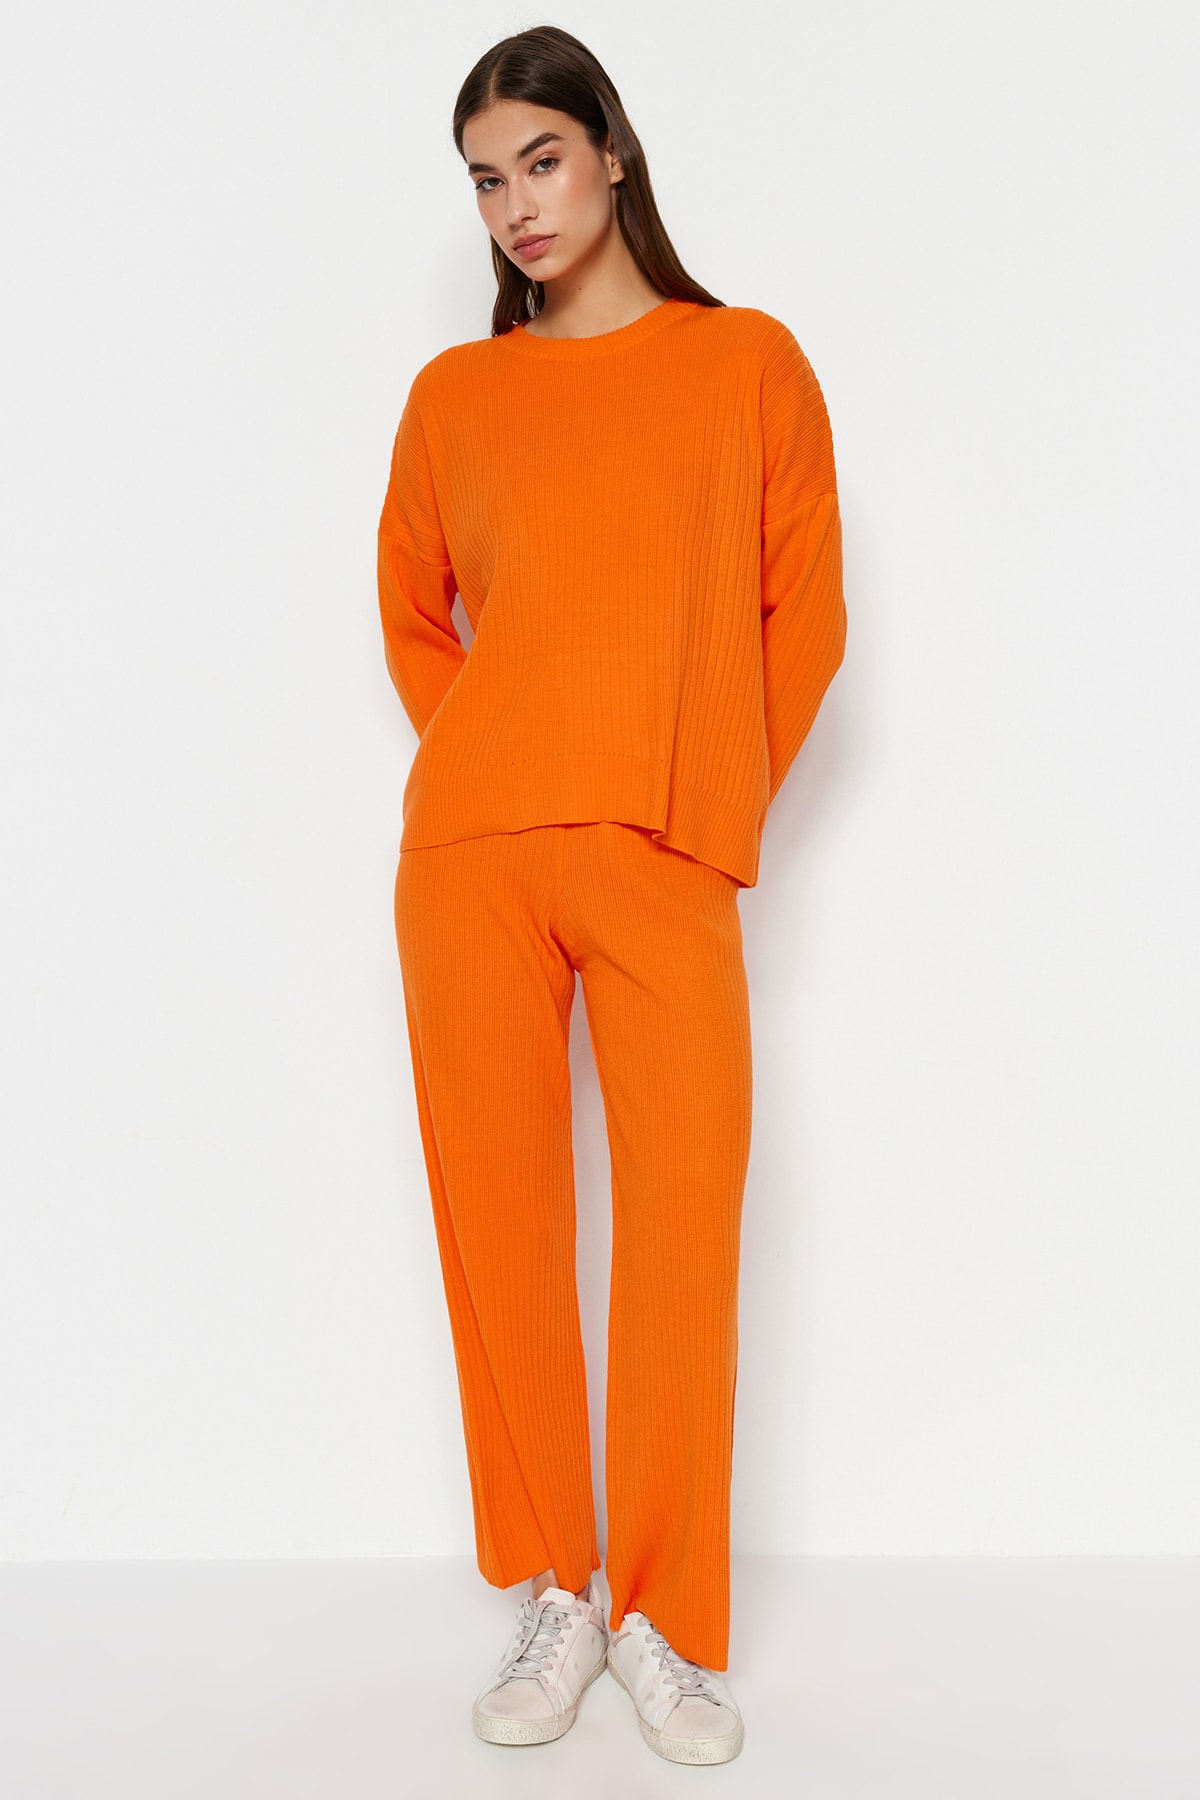 Trendyol Orange Basic Crew Neck Knitwear Top-Top Set